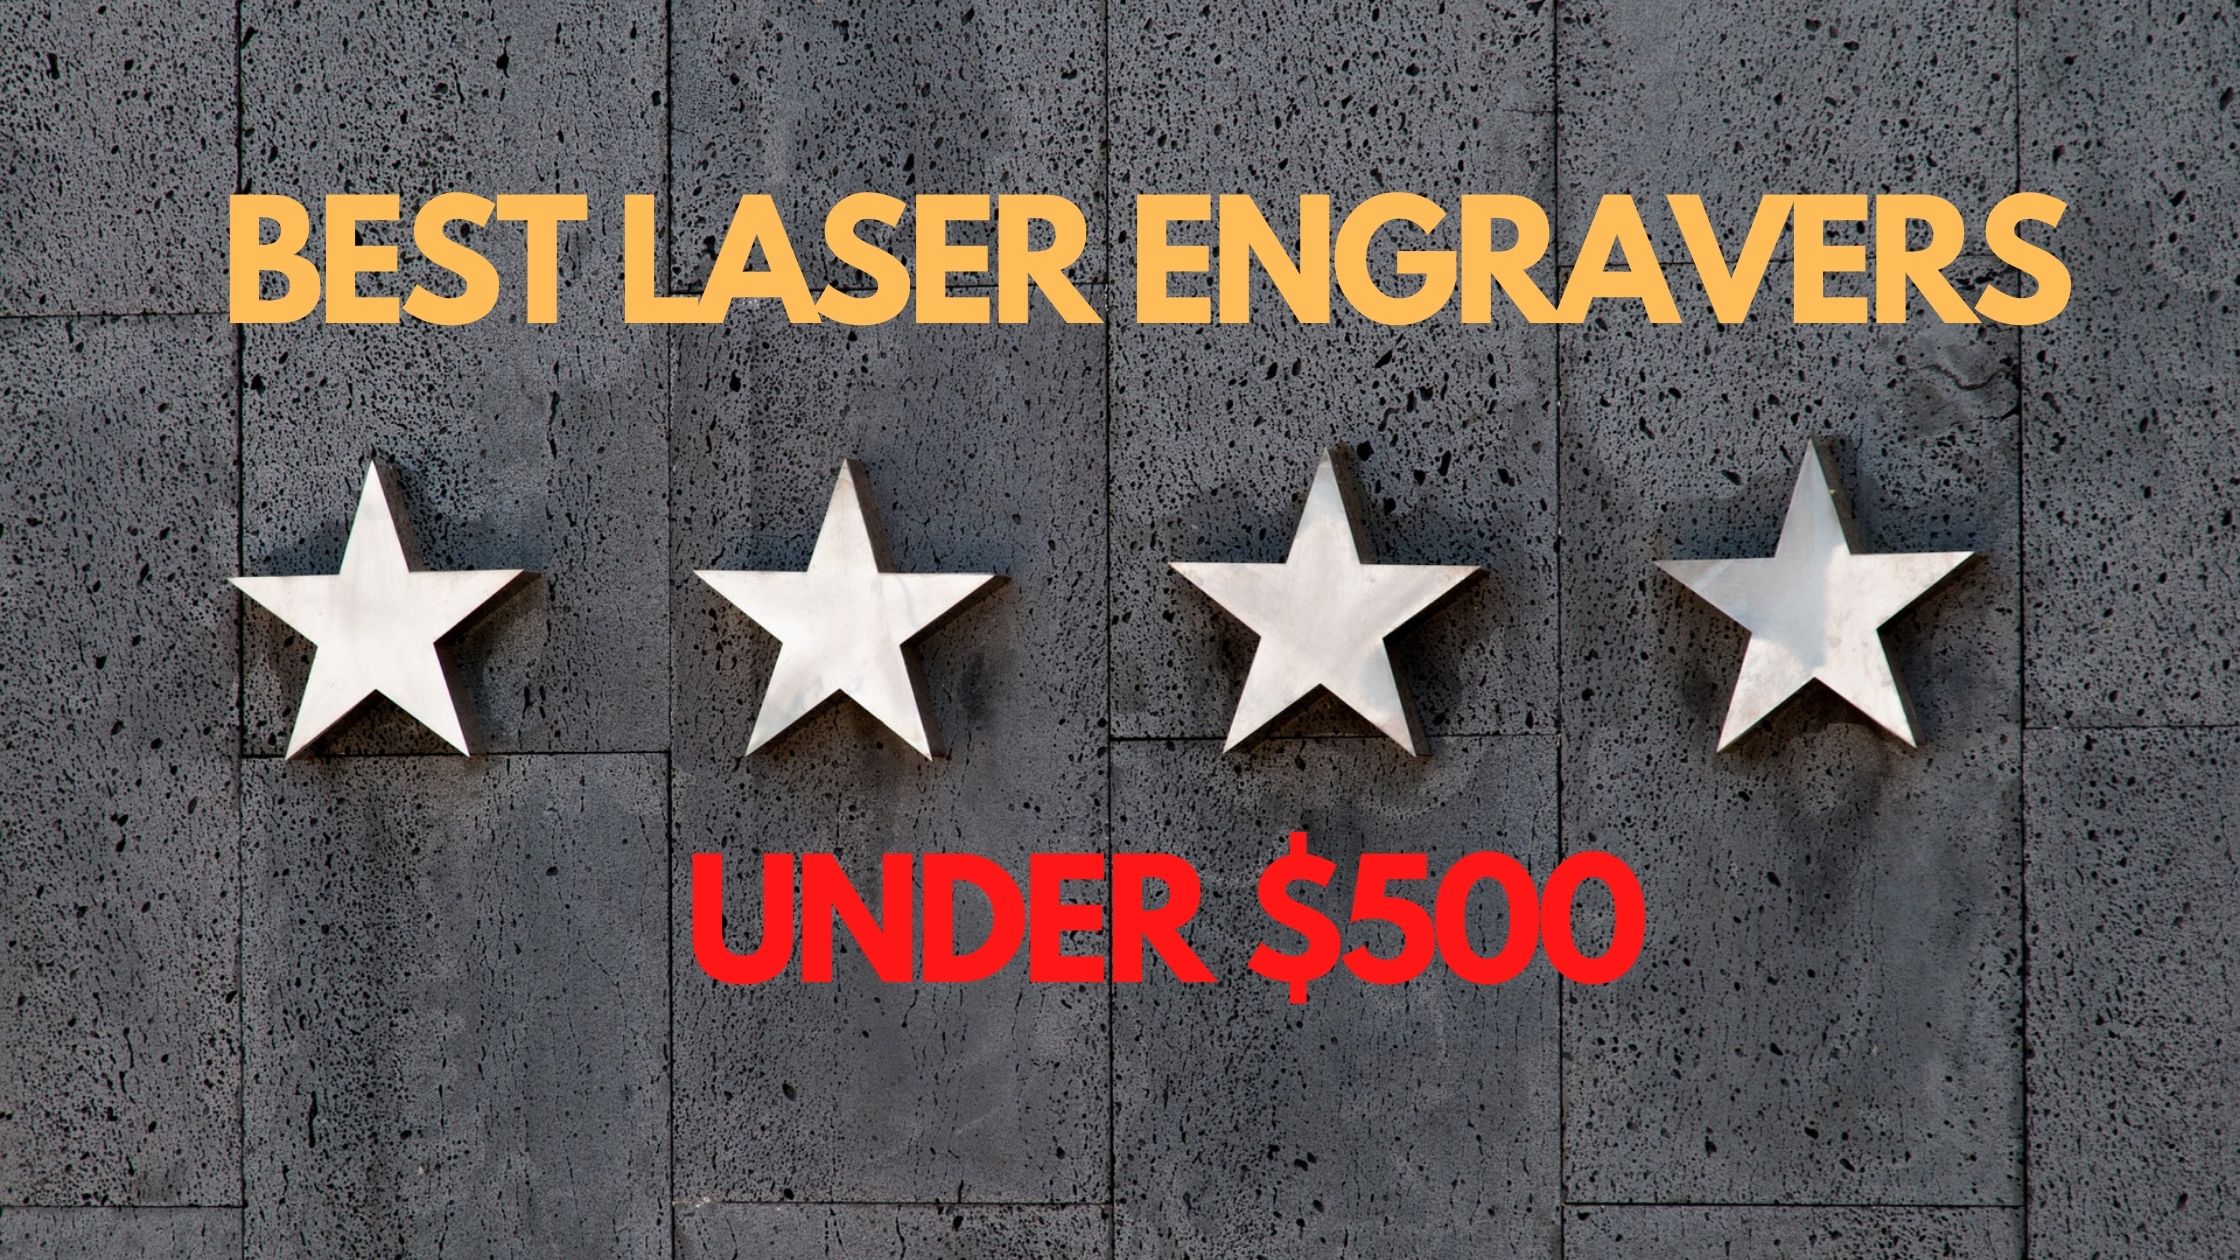 best laser engravers under $500